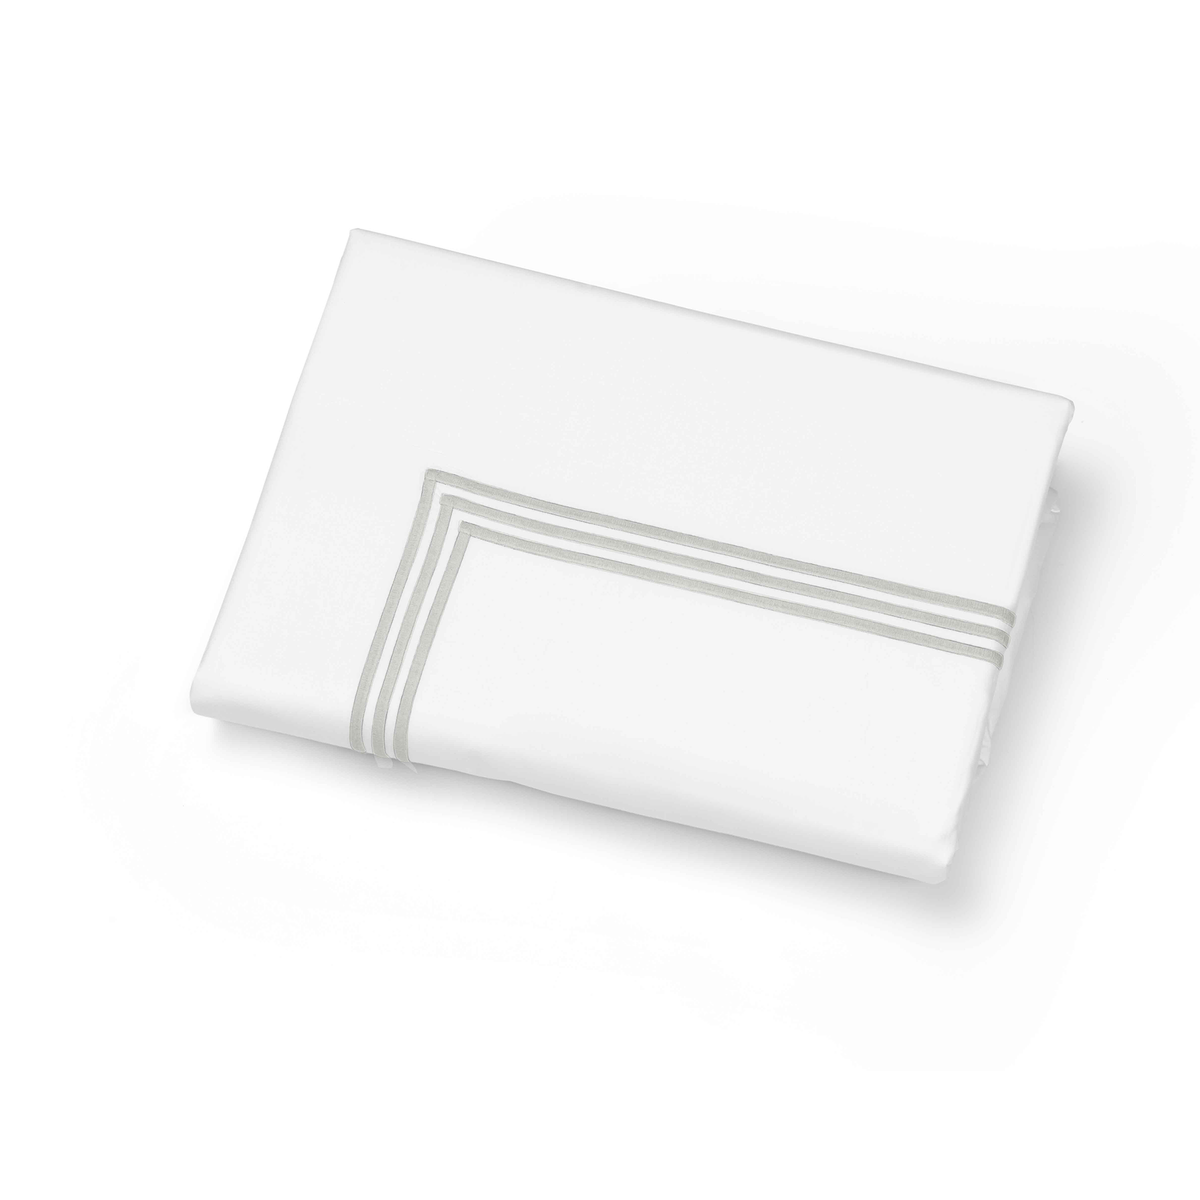 Folded Duvet Cover of Signoria Platinum Percale Bedding in White/Pearl Color